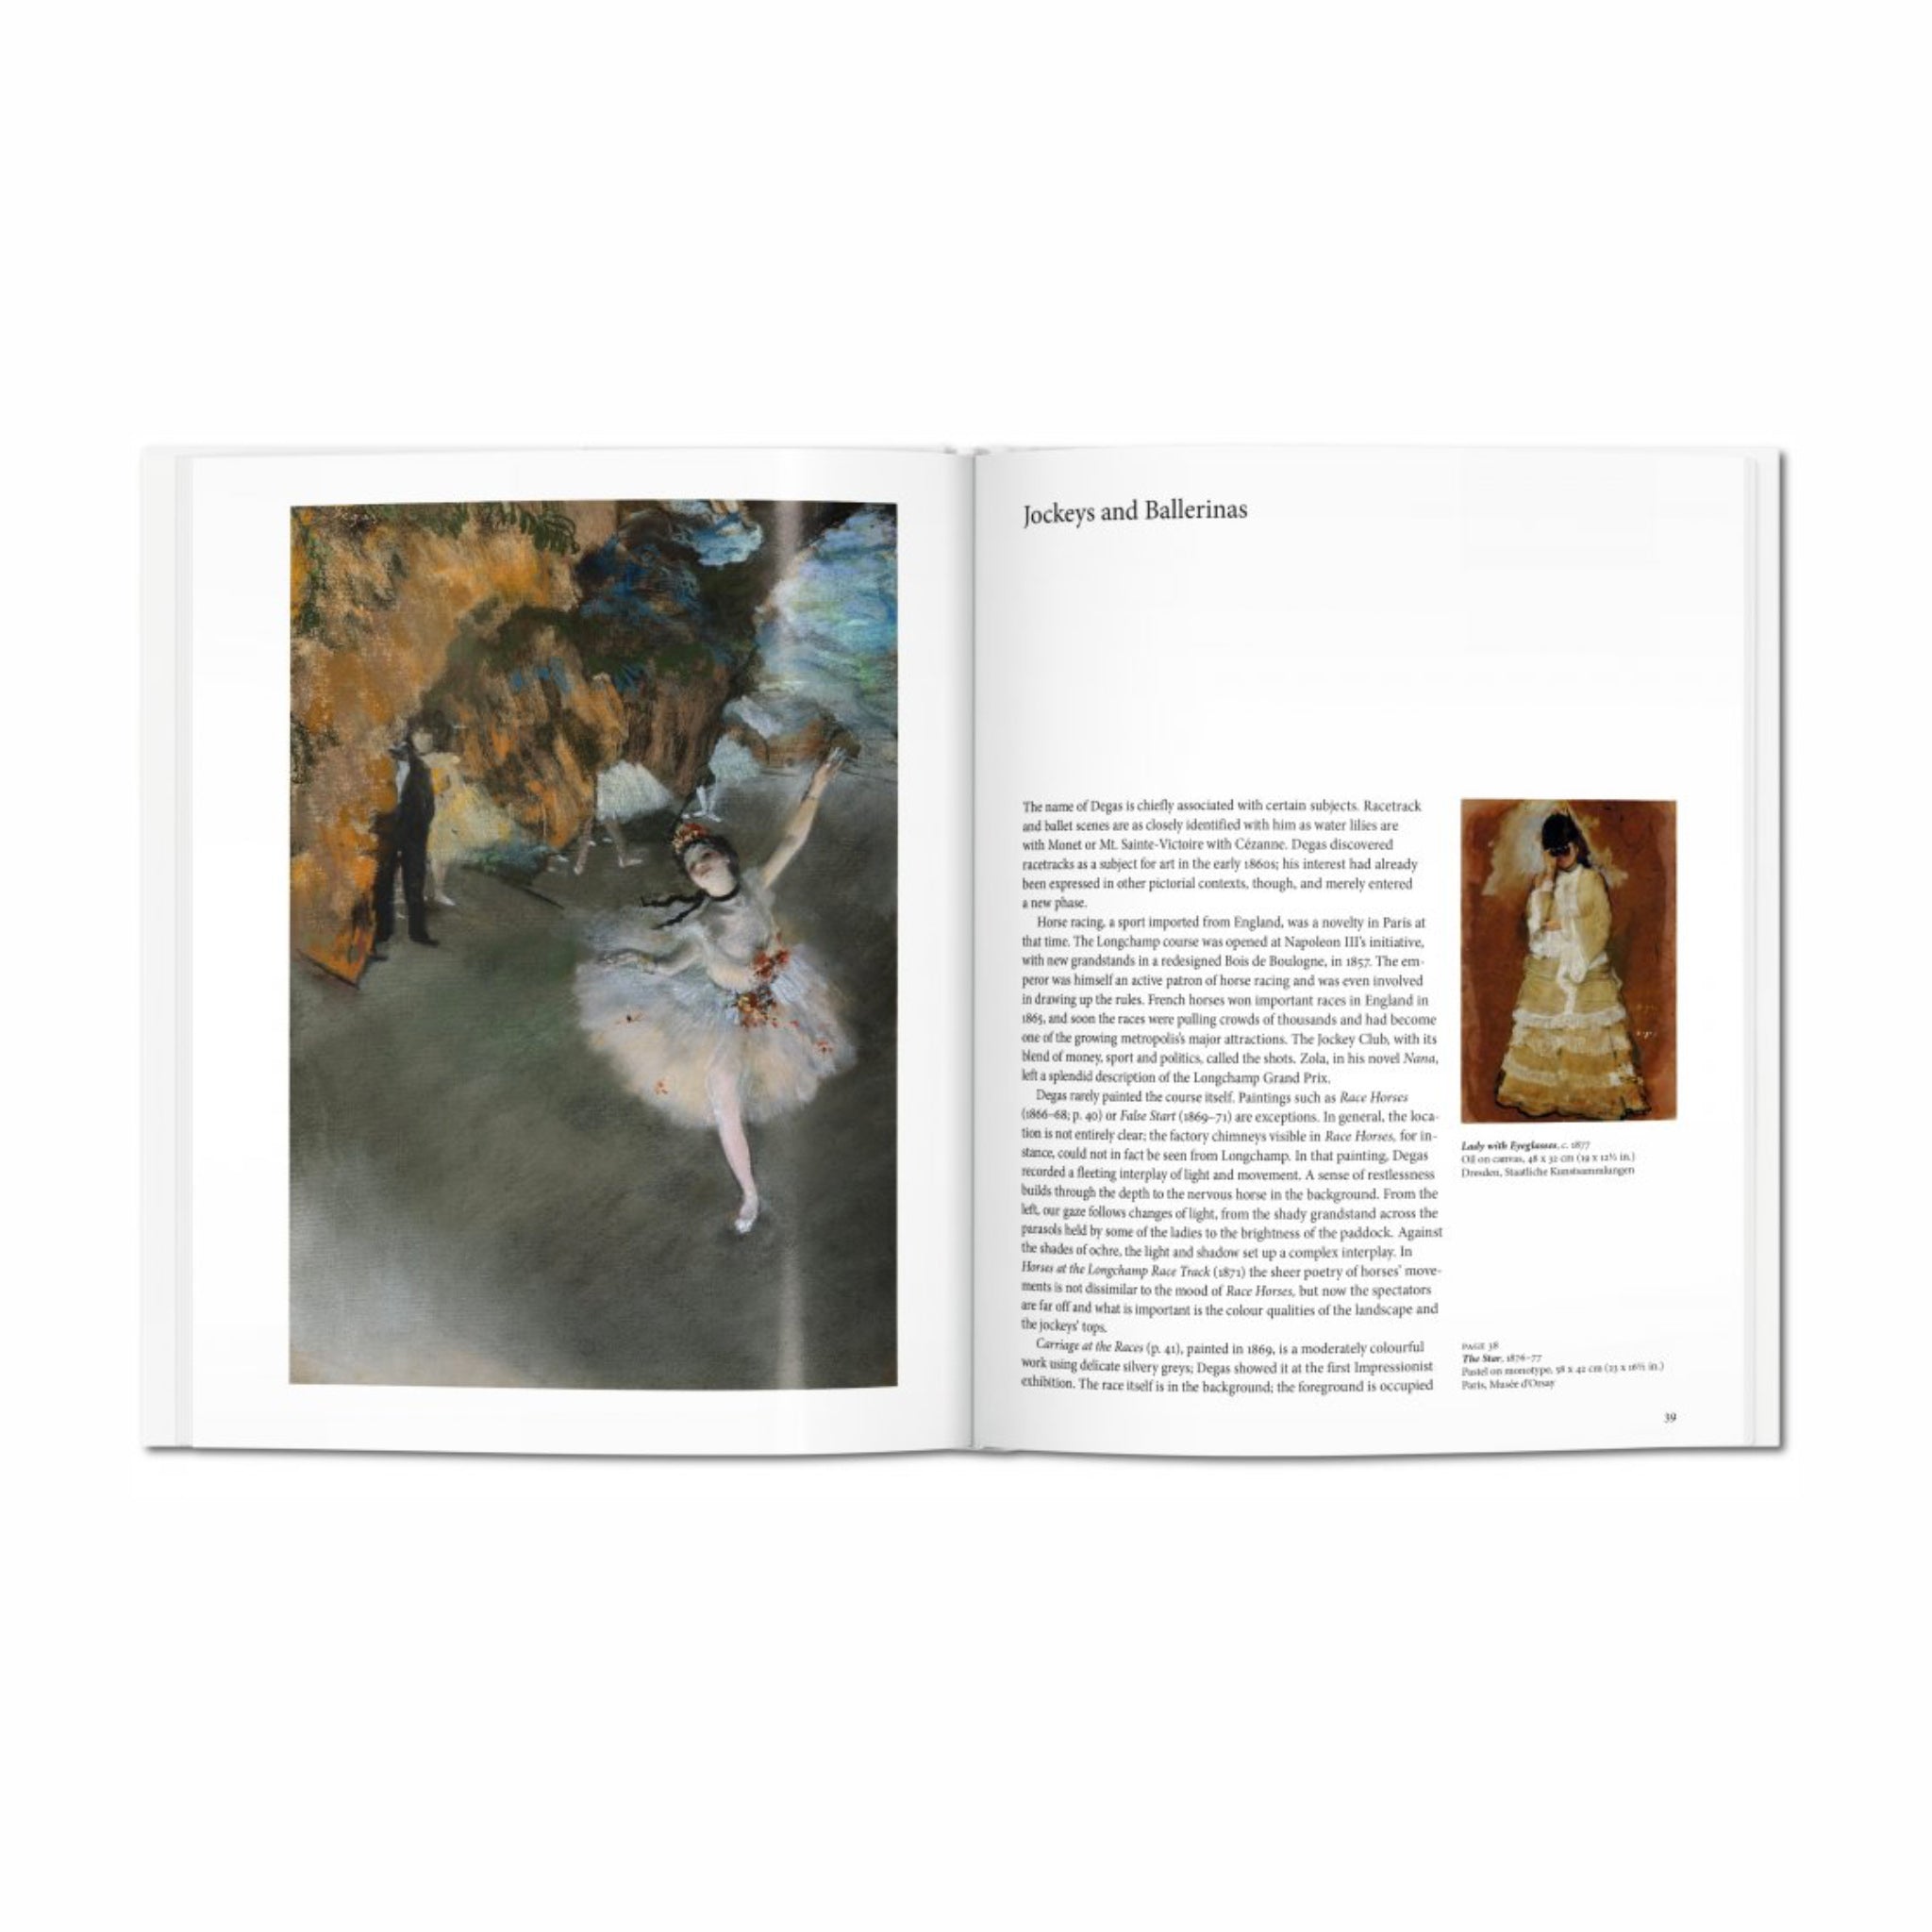 Taschen Edgar Degas (Hardcover) - August Shop